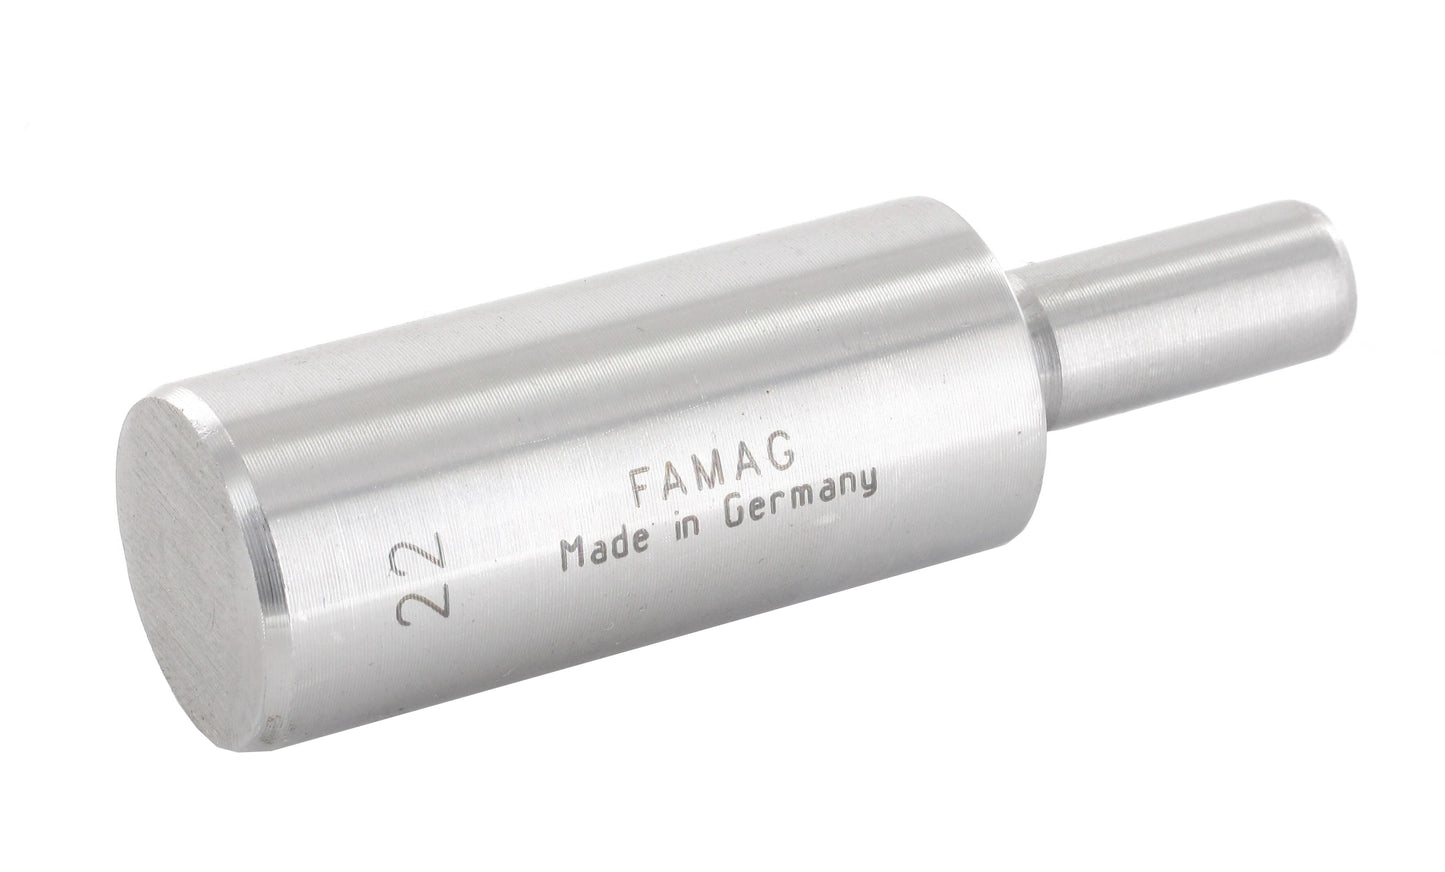 FAMAG 10 mm Guding Pin For Bormax 2.0 Prima 1614 Long Series 44.45mm - 120mm, 1619010